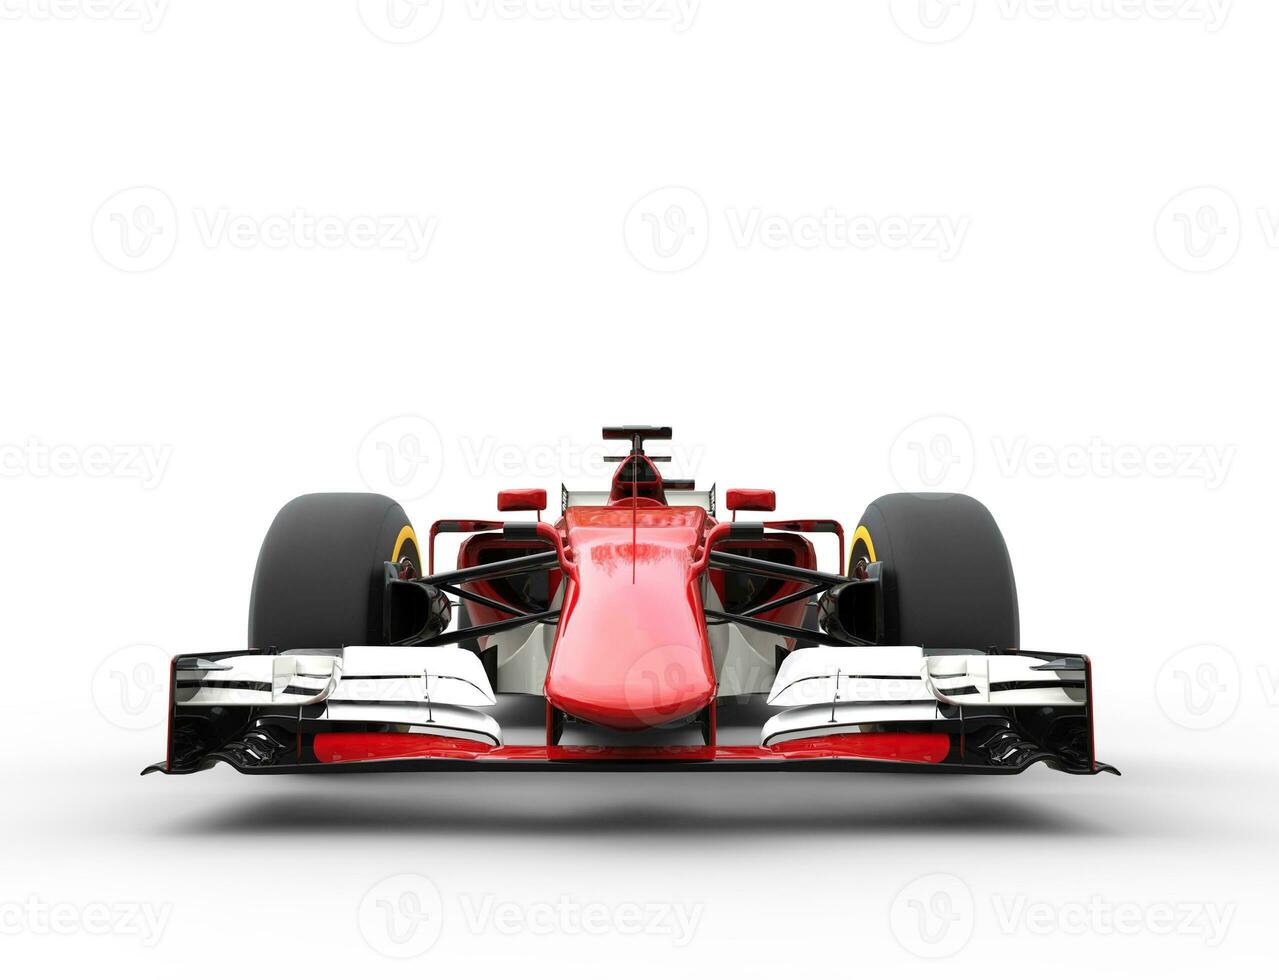 rojo fórmula uno coche - frente ver extremo de cerca foto